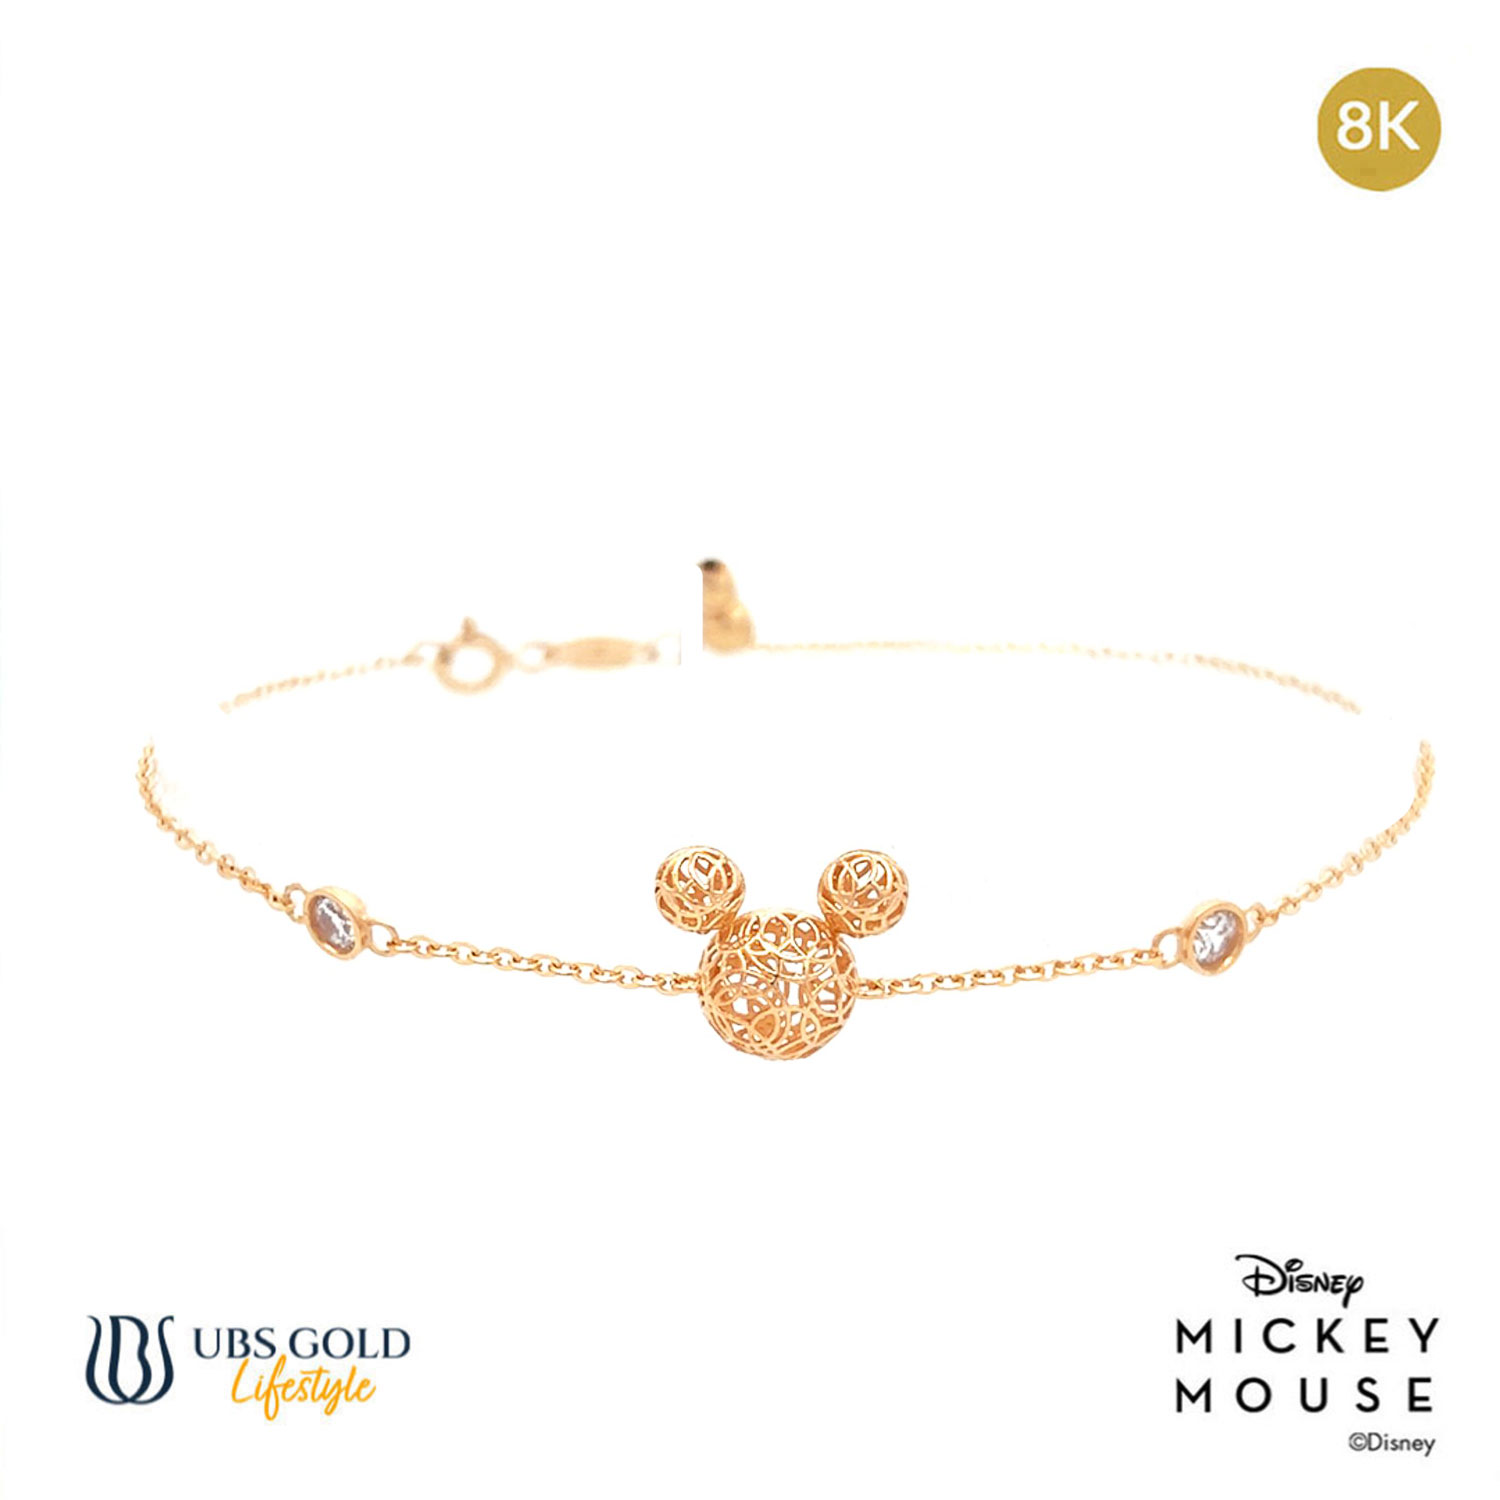 UBS Gold Gelang Emas Disney Mickey Mouse - Kgy0103K - 8K